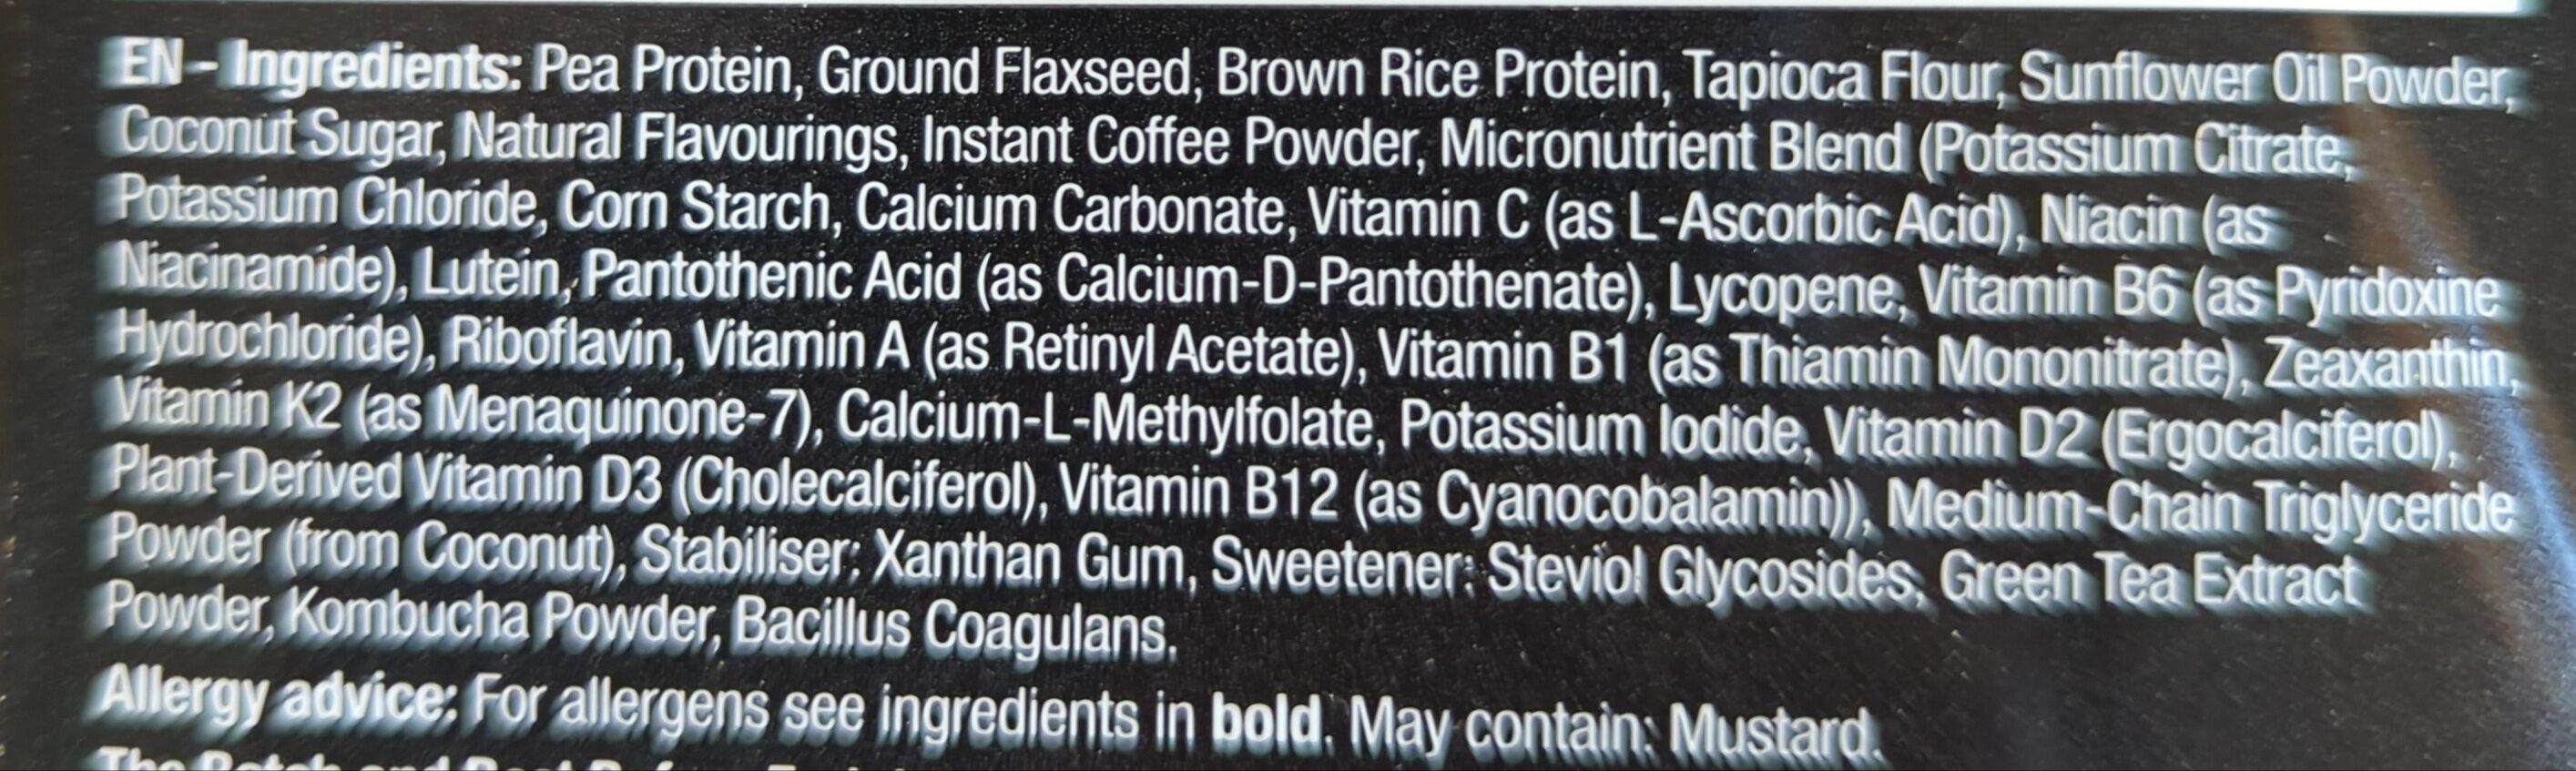 Black Edition Coffee Caramel v1.1 - Ingredients